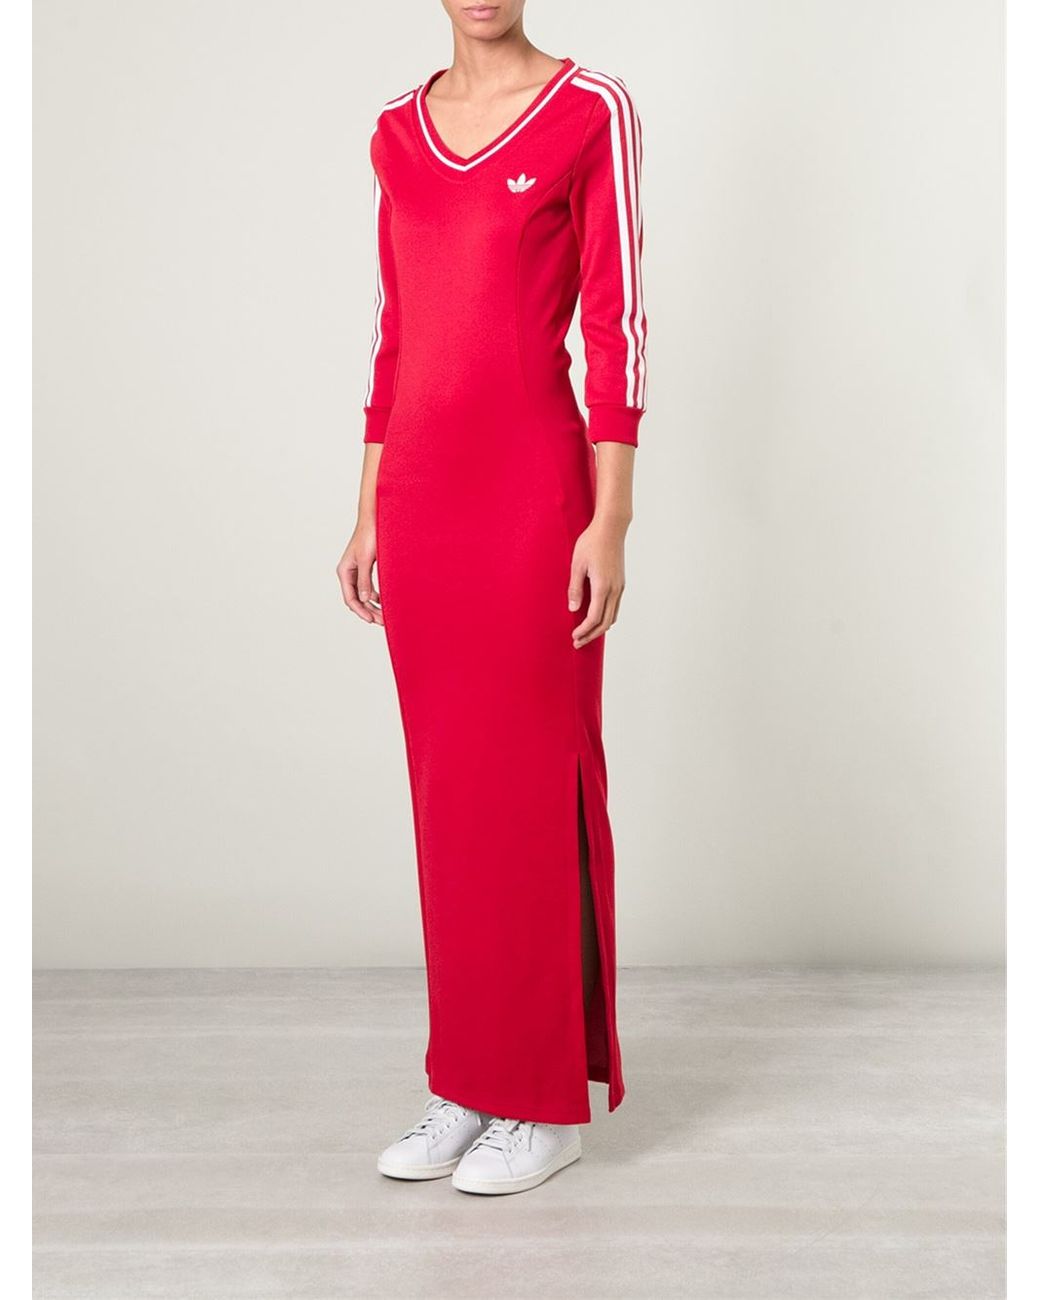 espiral Ennegrecer Inconsciente adidas Long Line Jersey Dress in Red | Lyst